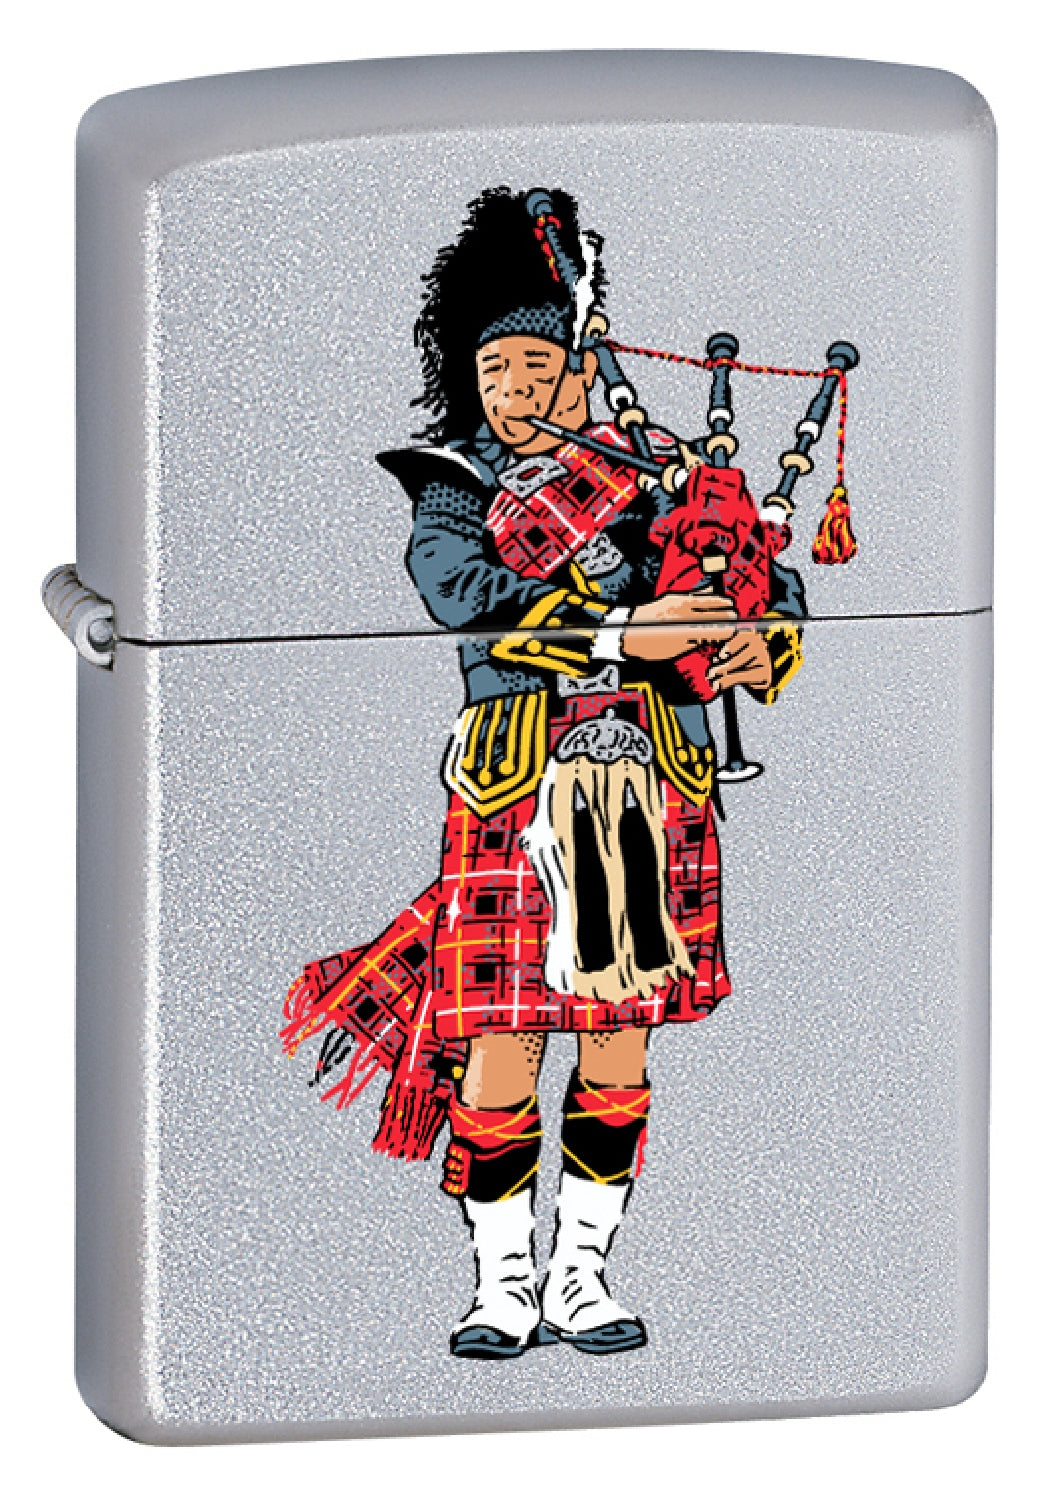 Zippo Scottish Bagpiper Windproof Flame Lighter